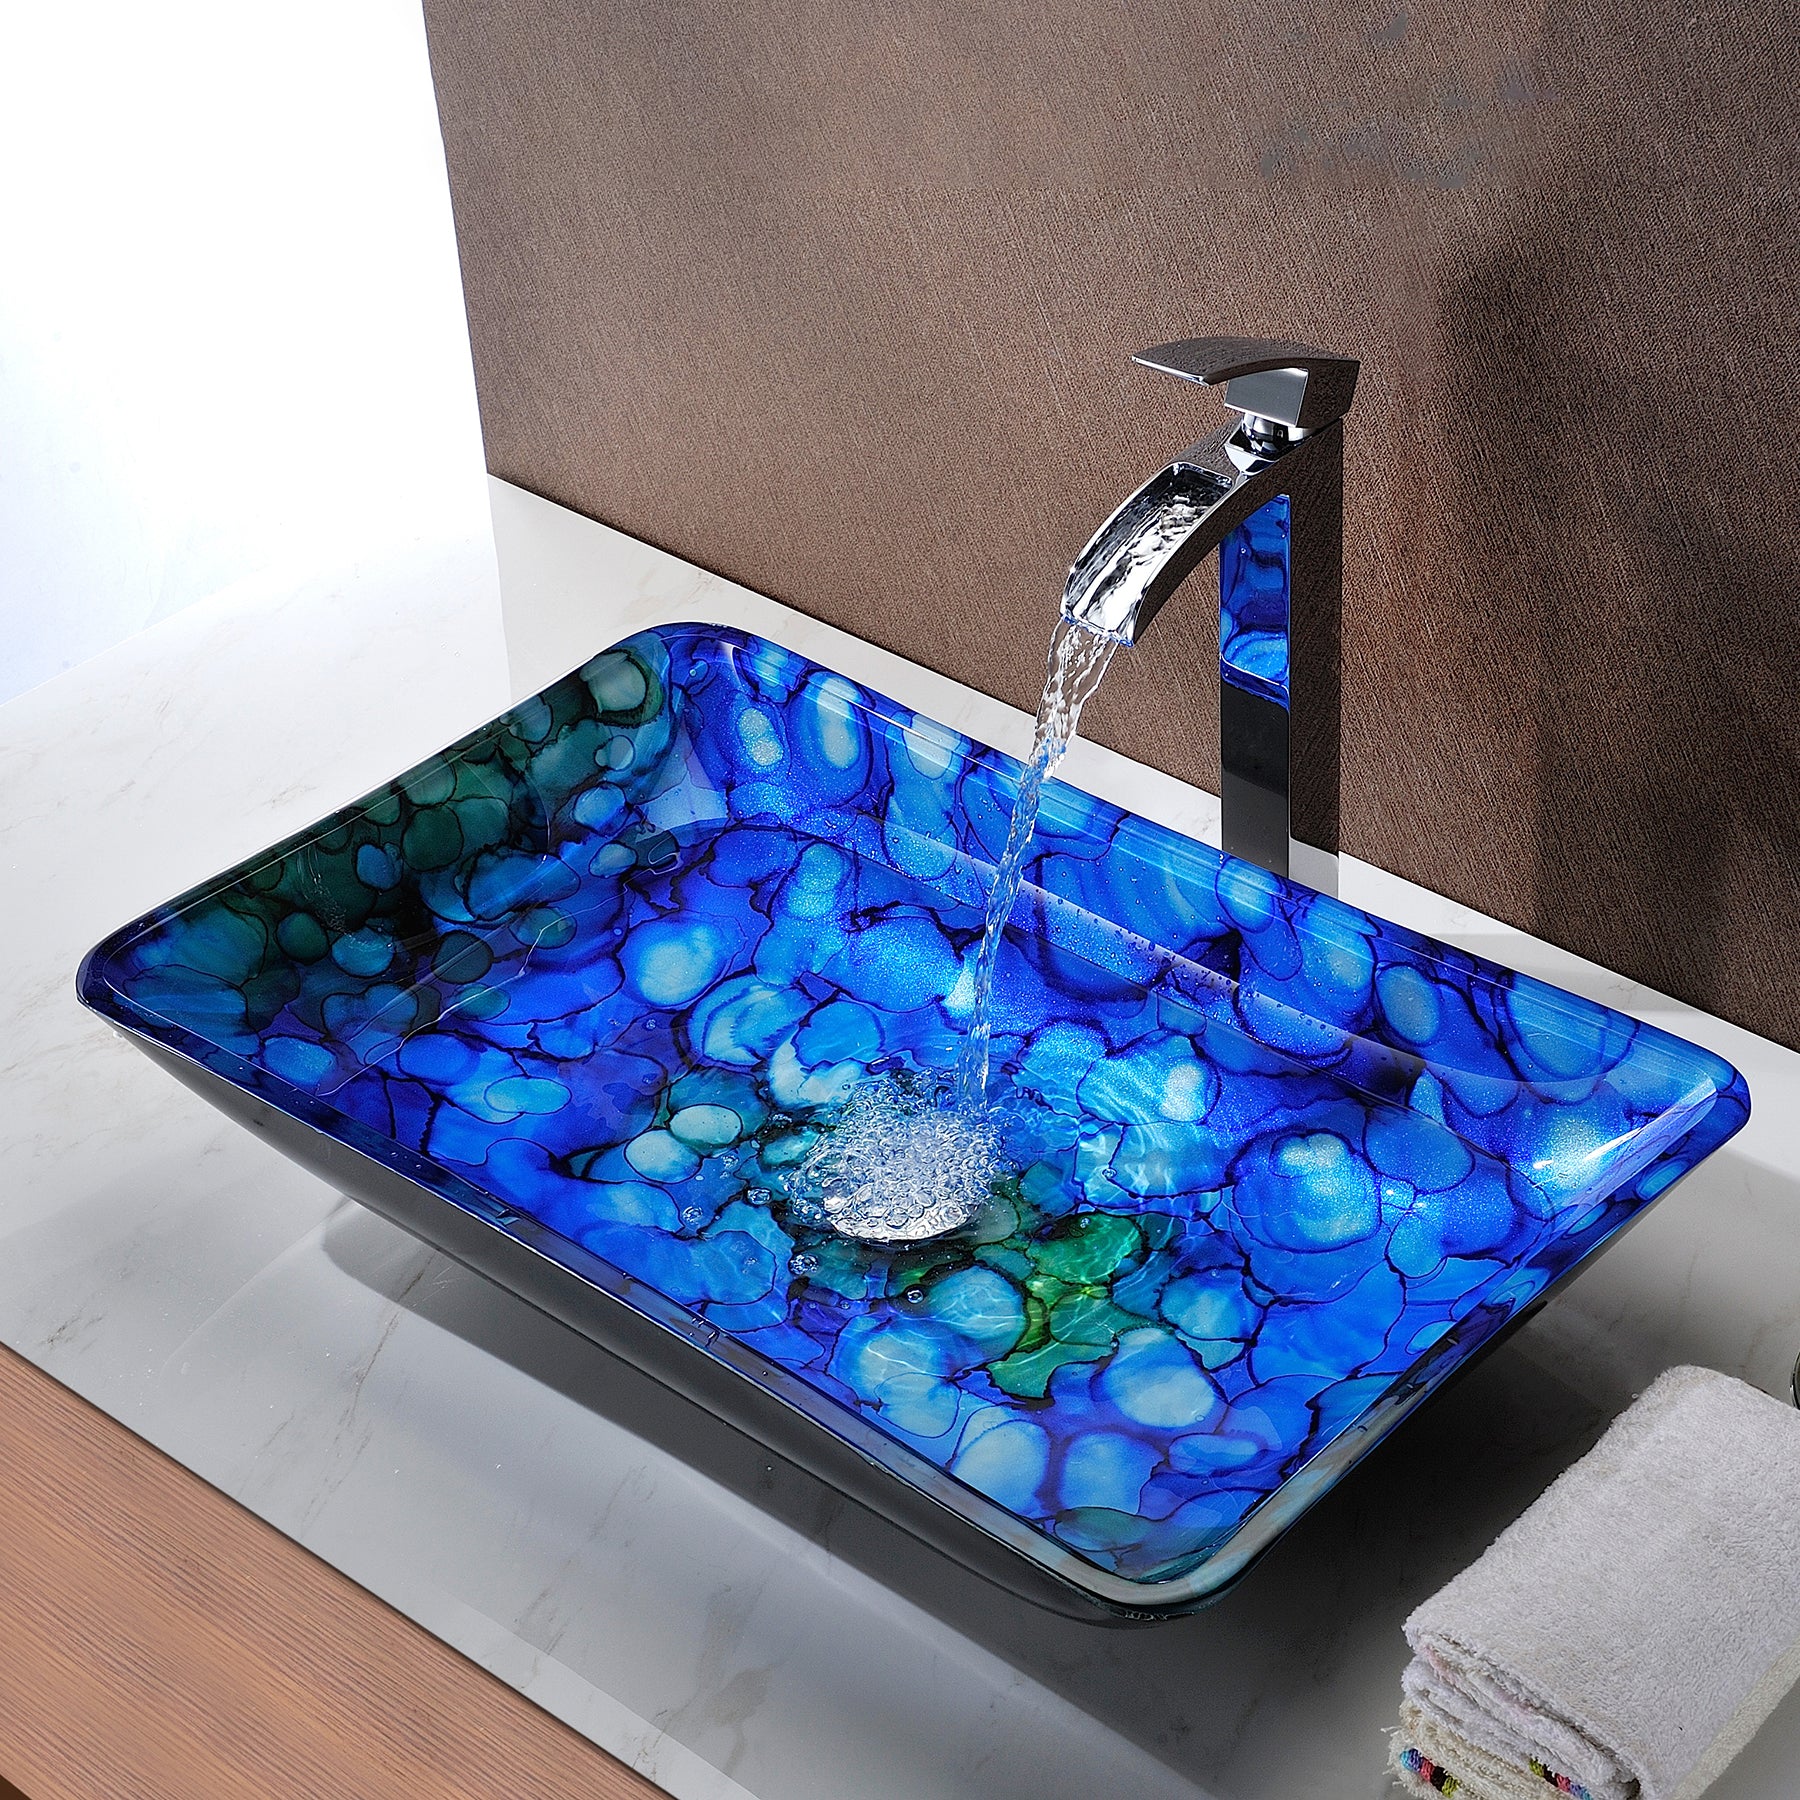 Glass Vessel Sink in Lustrous Blue - Voce Series Deco